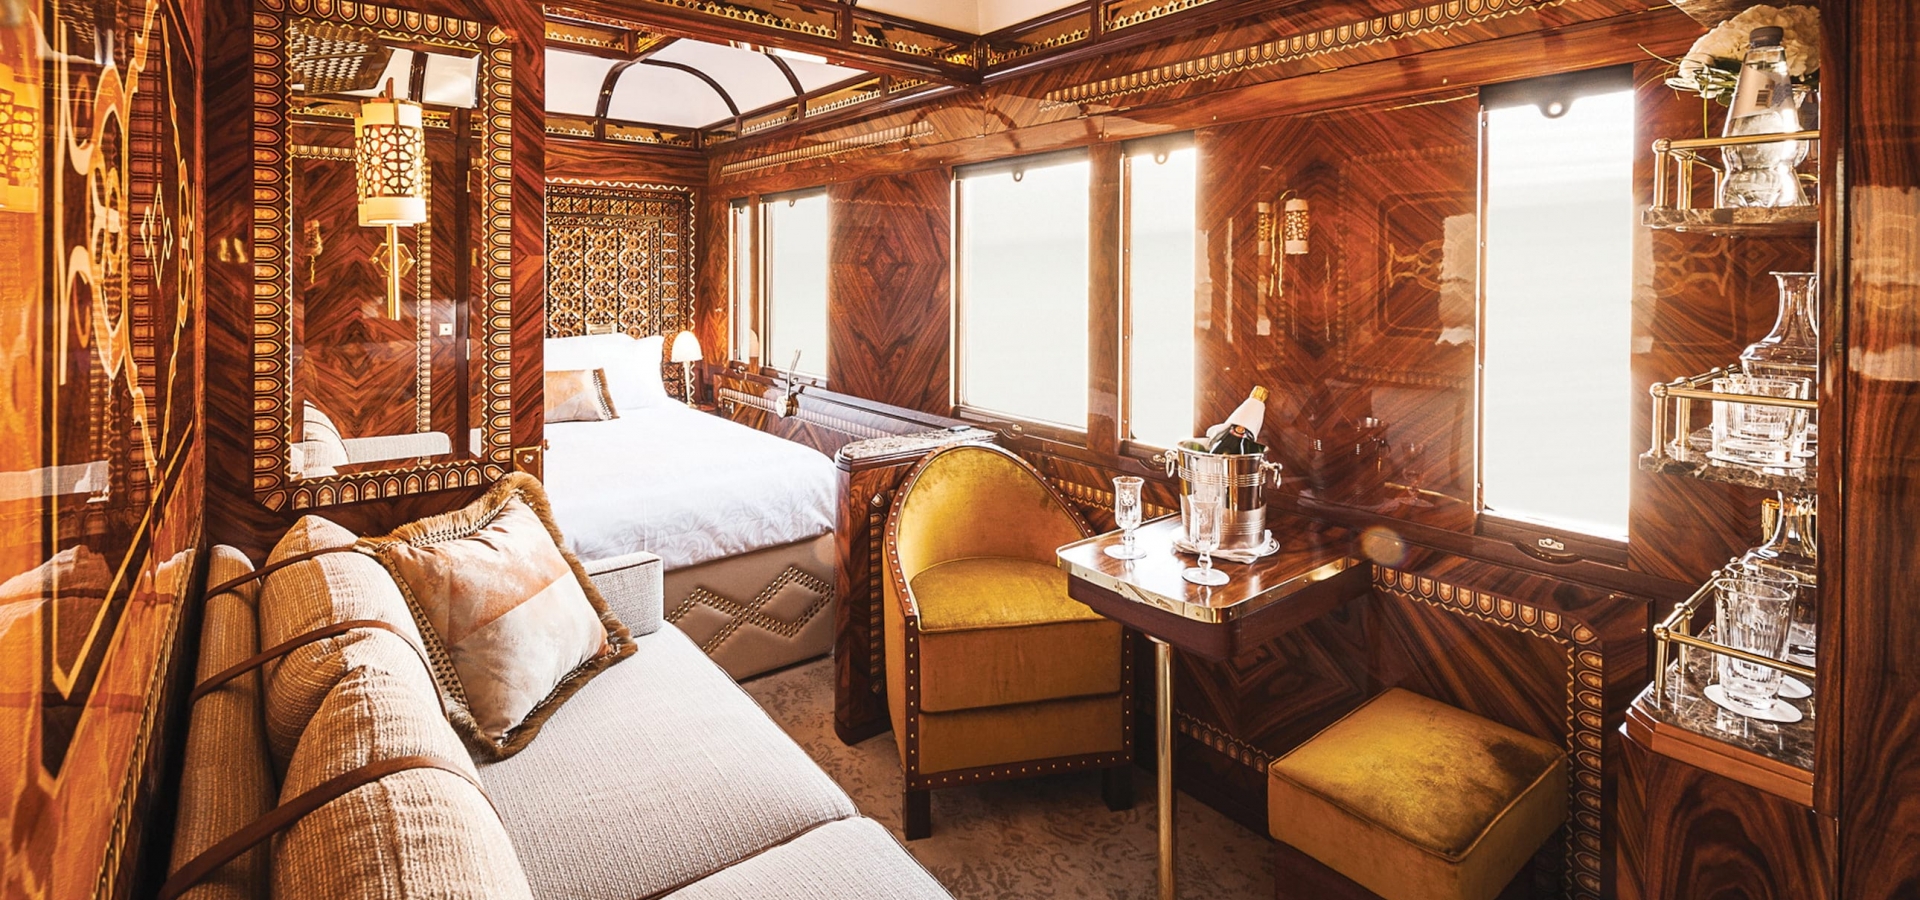 The Venice Simplon Orient Express